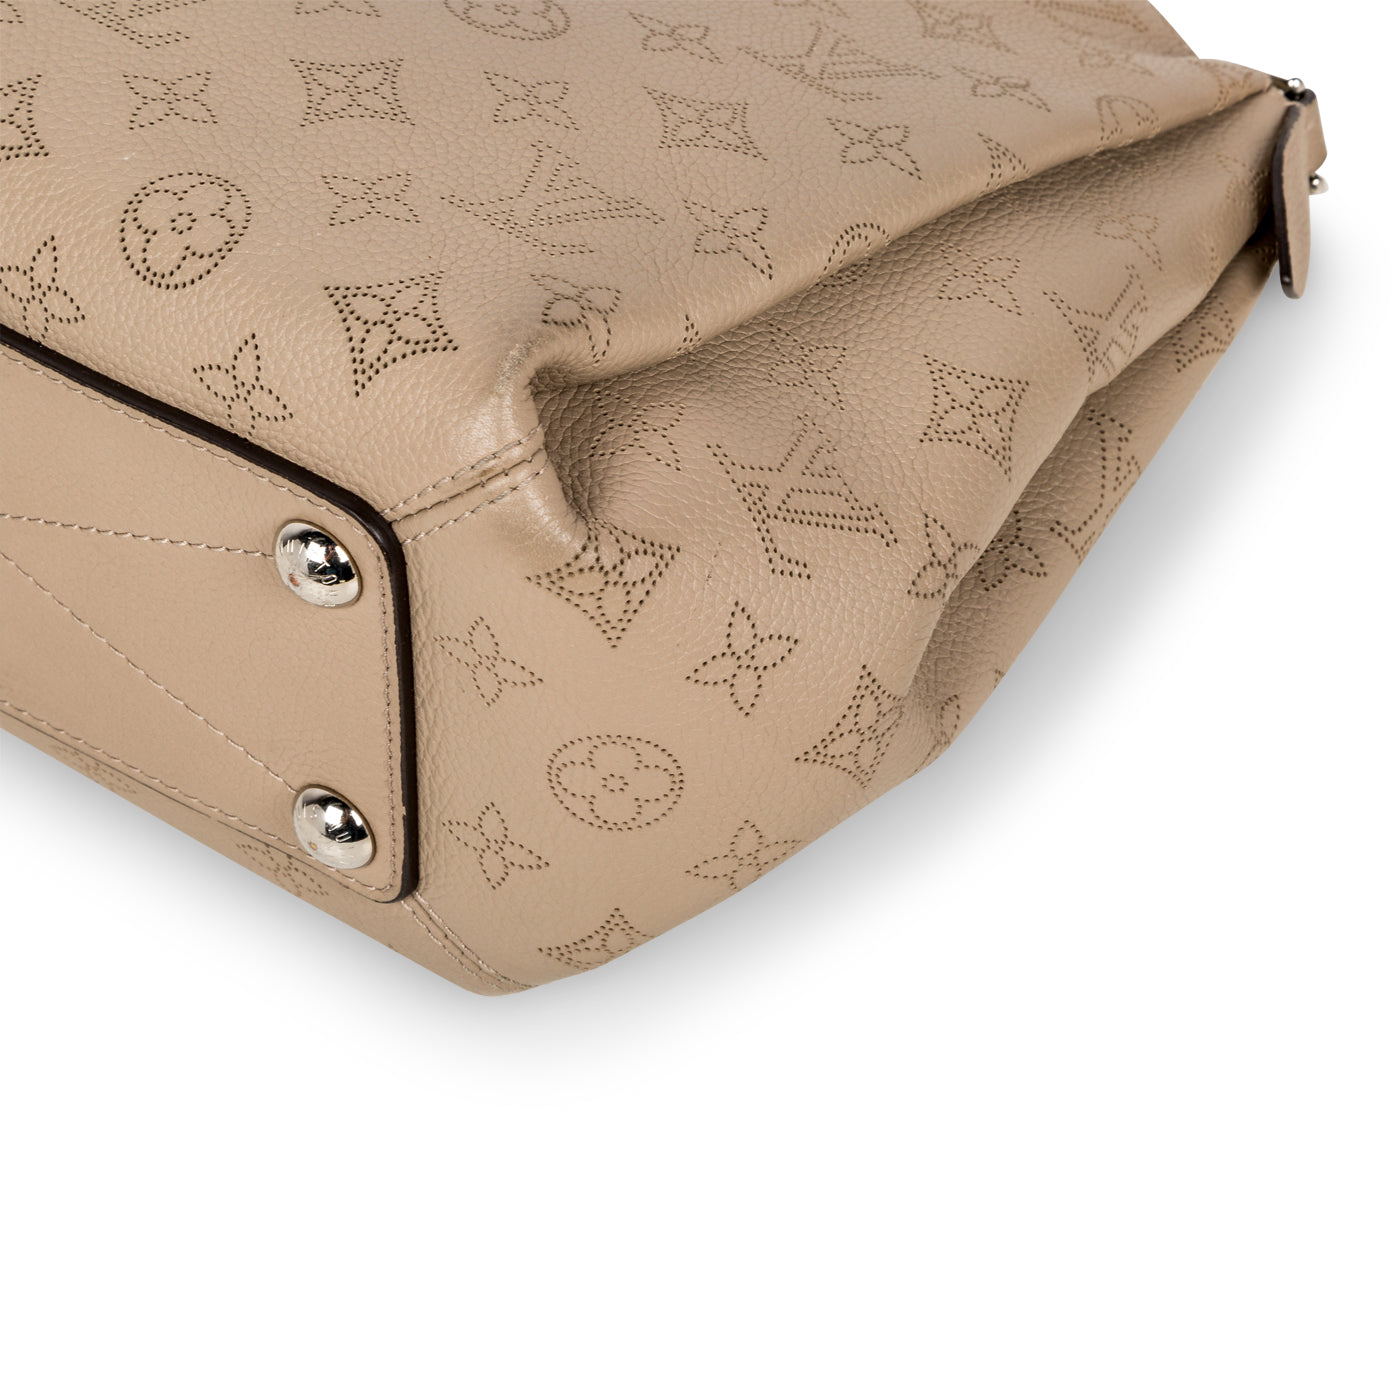 Louis Vuitton M51224 BABYLONE BB Mahina GALET Purse Crossbody Bag NEW